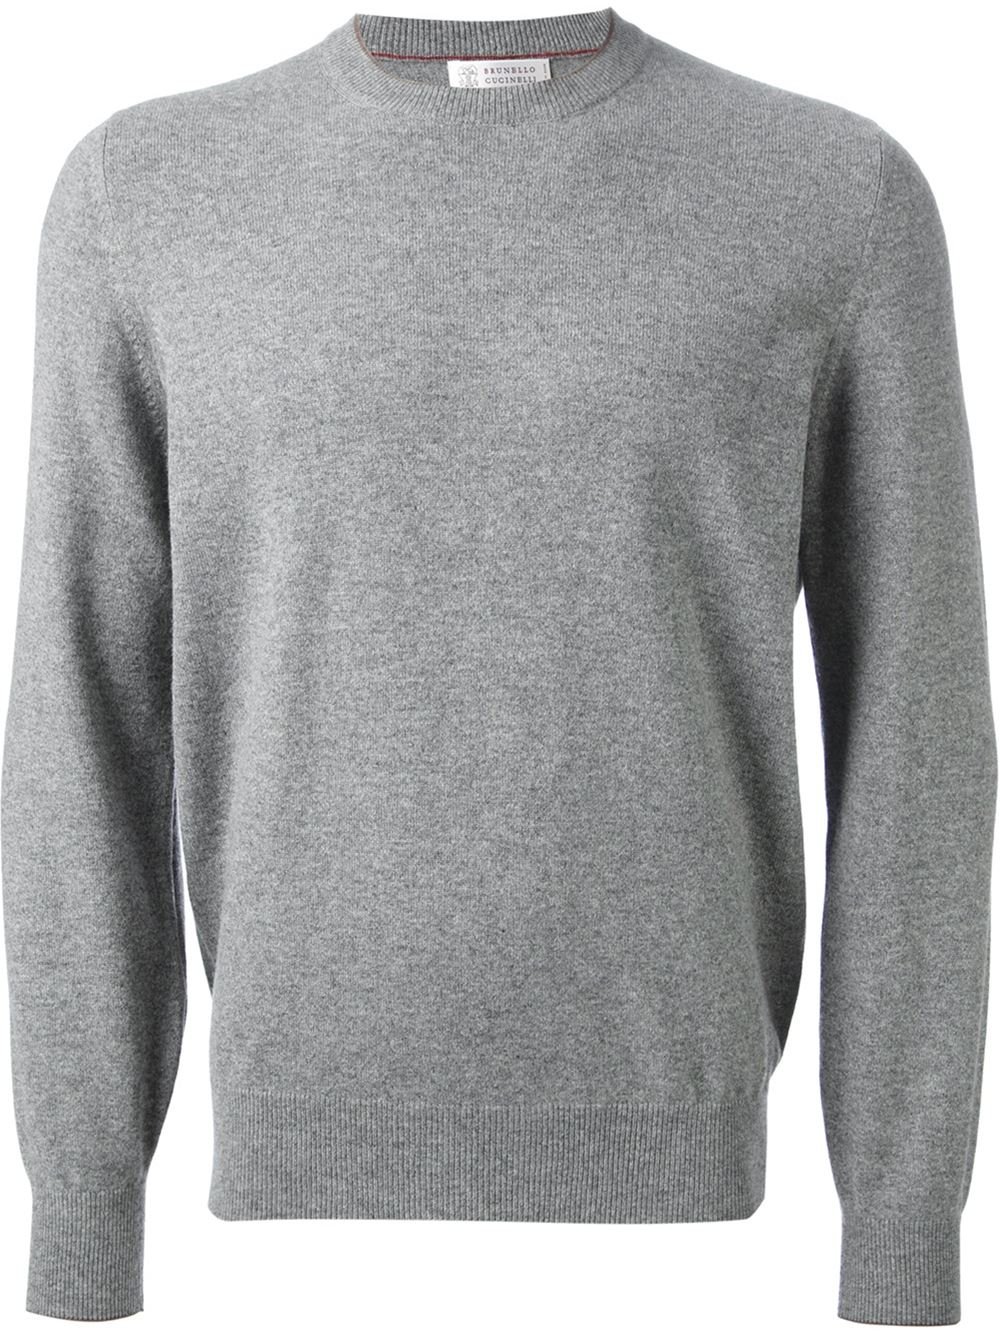 Lyst - Brunello Cucinelli Crew Neck Sweater in Gray for Men